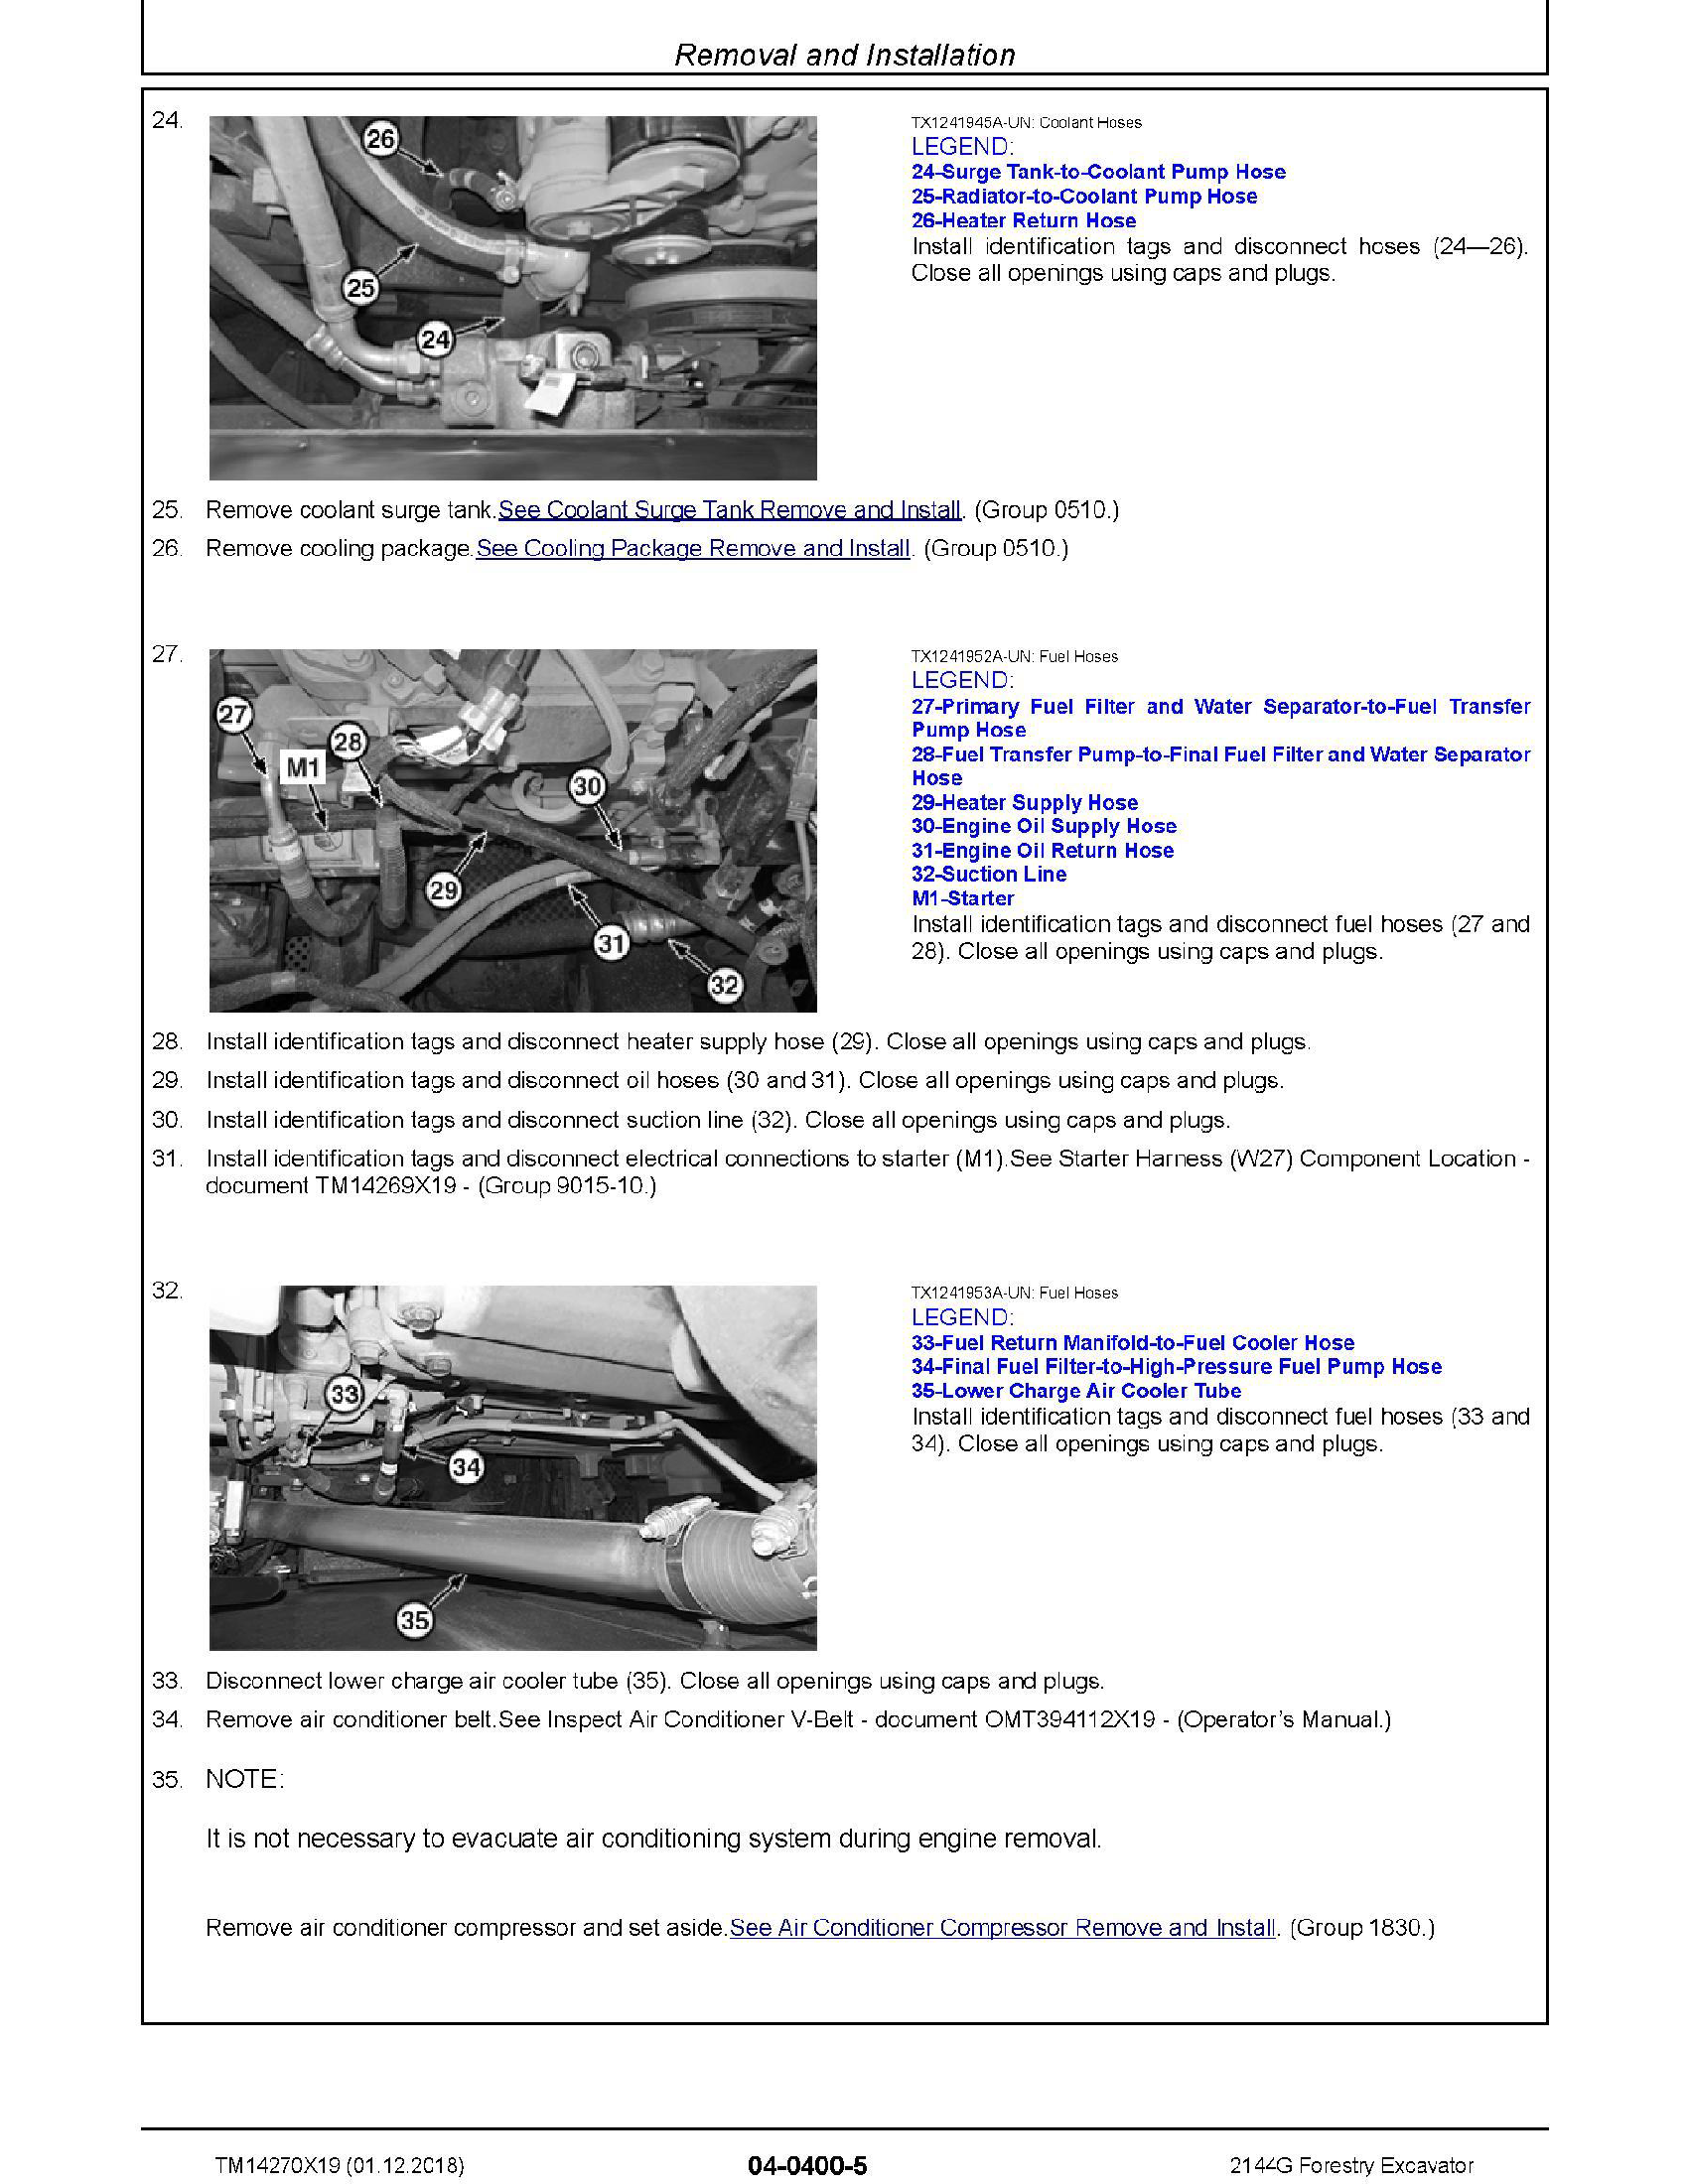 John Deere E260LC manual